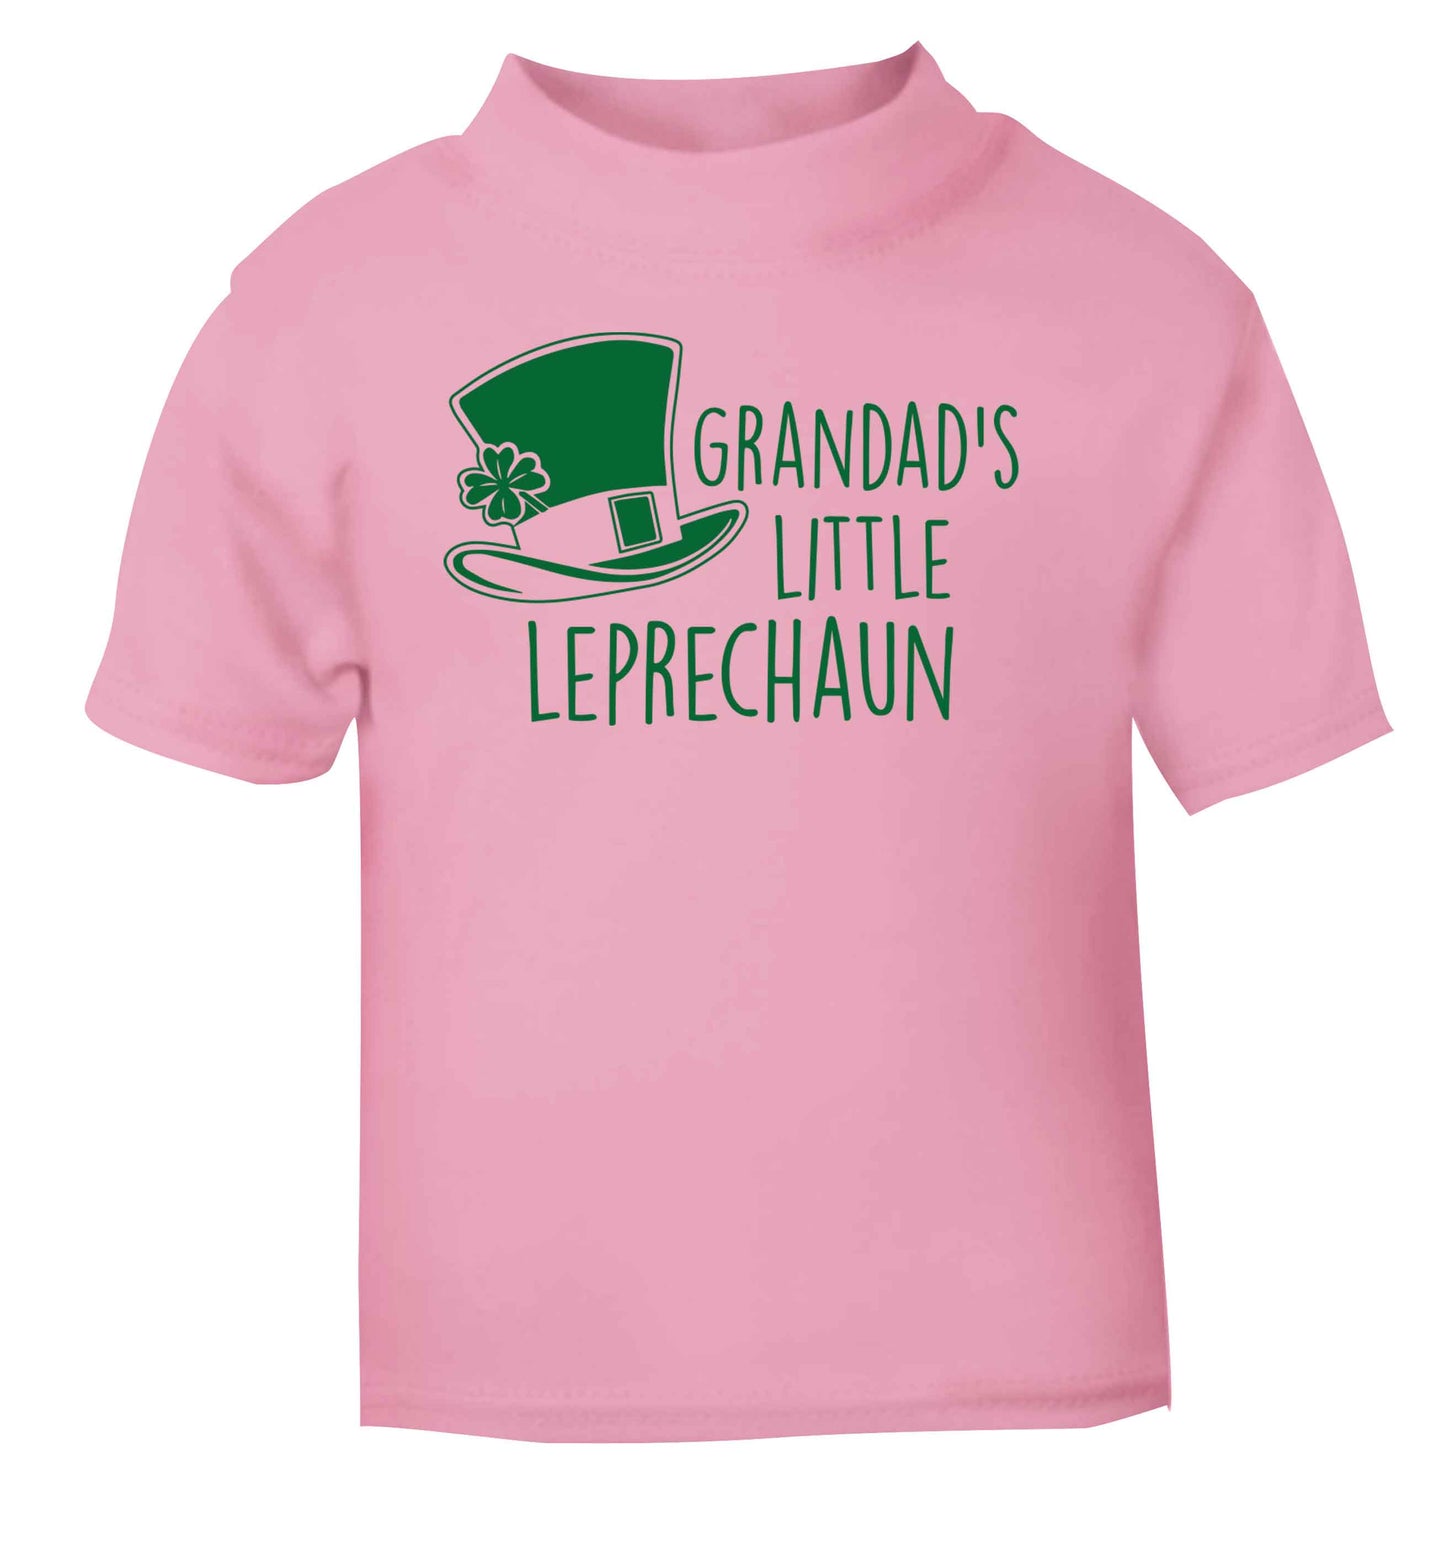 Grandad's little leprechaun light pink baby toddler Tshirt 2 Years